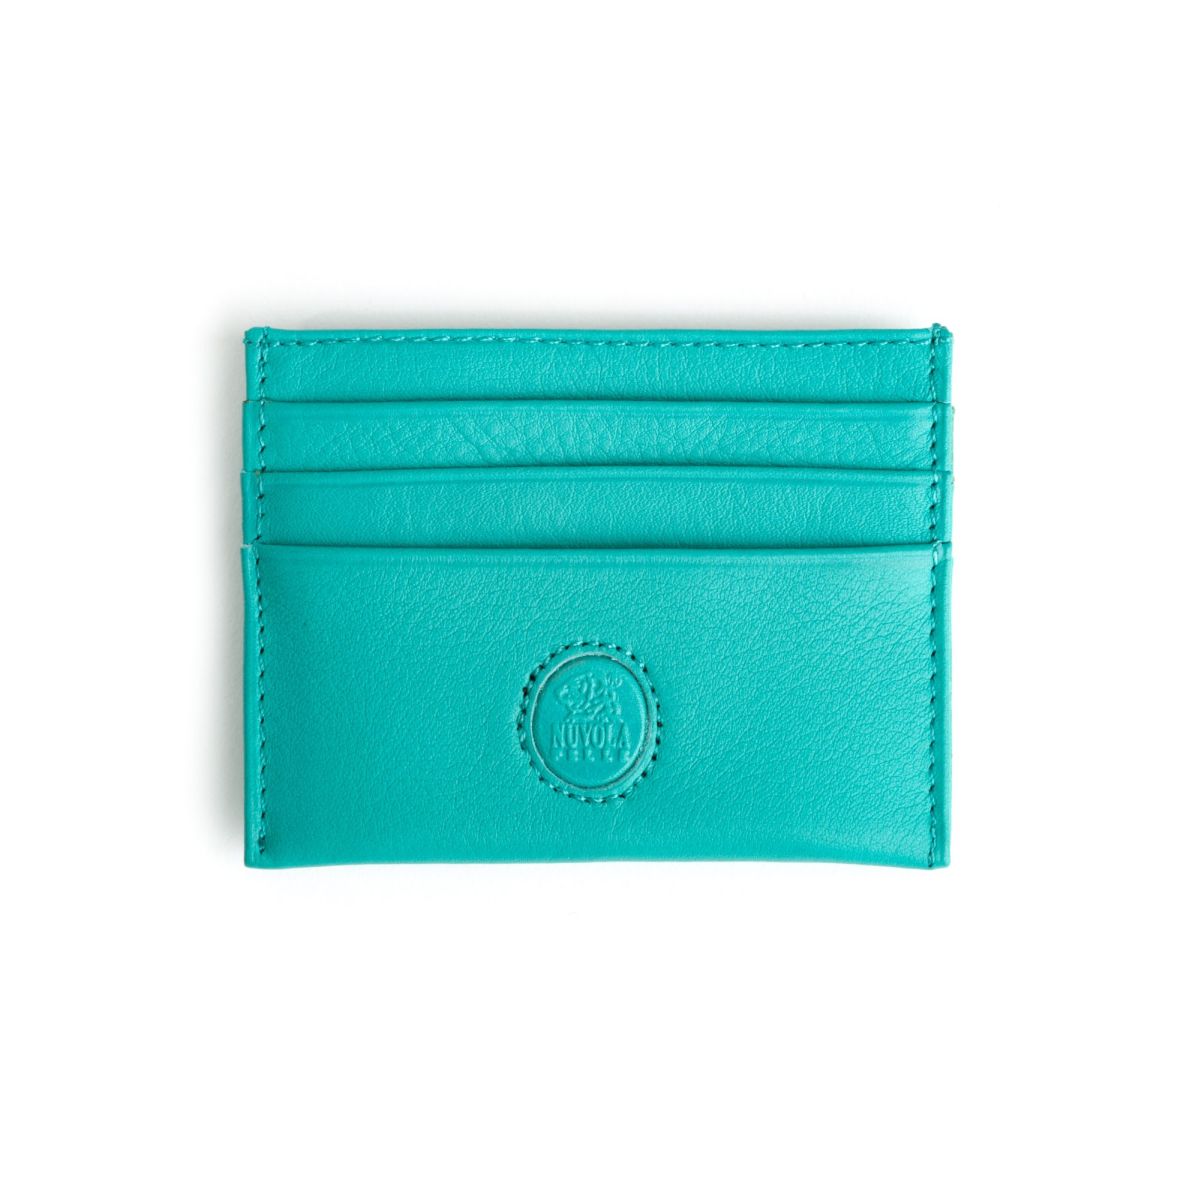 NUVOLA PELLE Minimalist leather credit card wallet - Turquoise